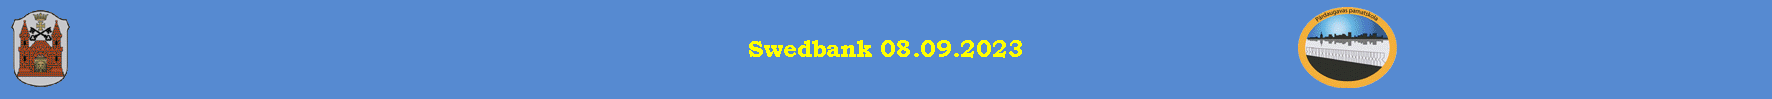 Swedbank 08.09.2023